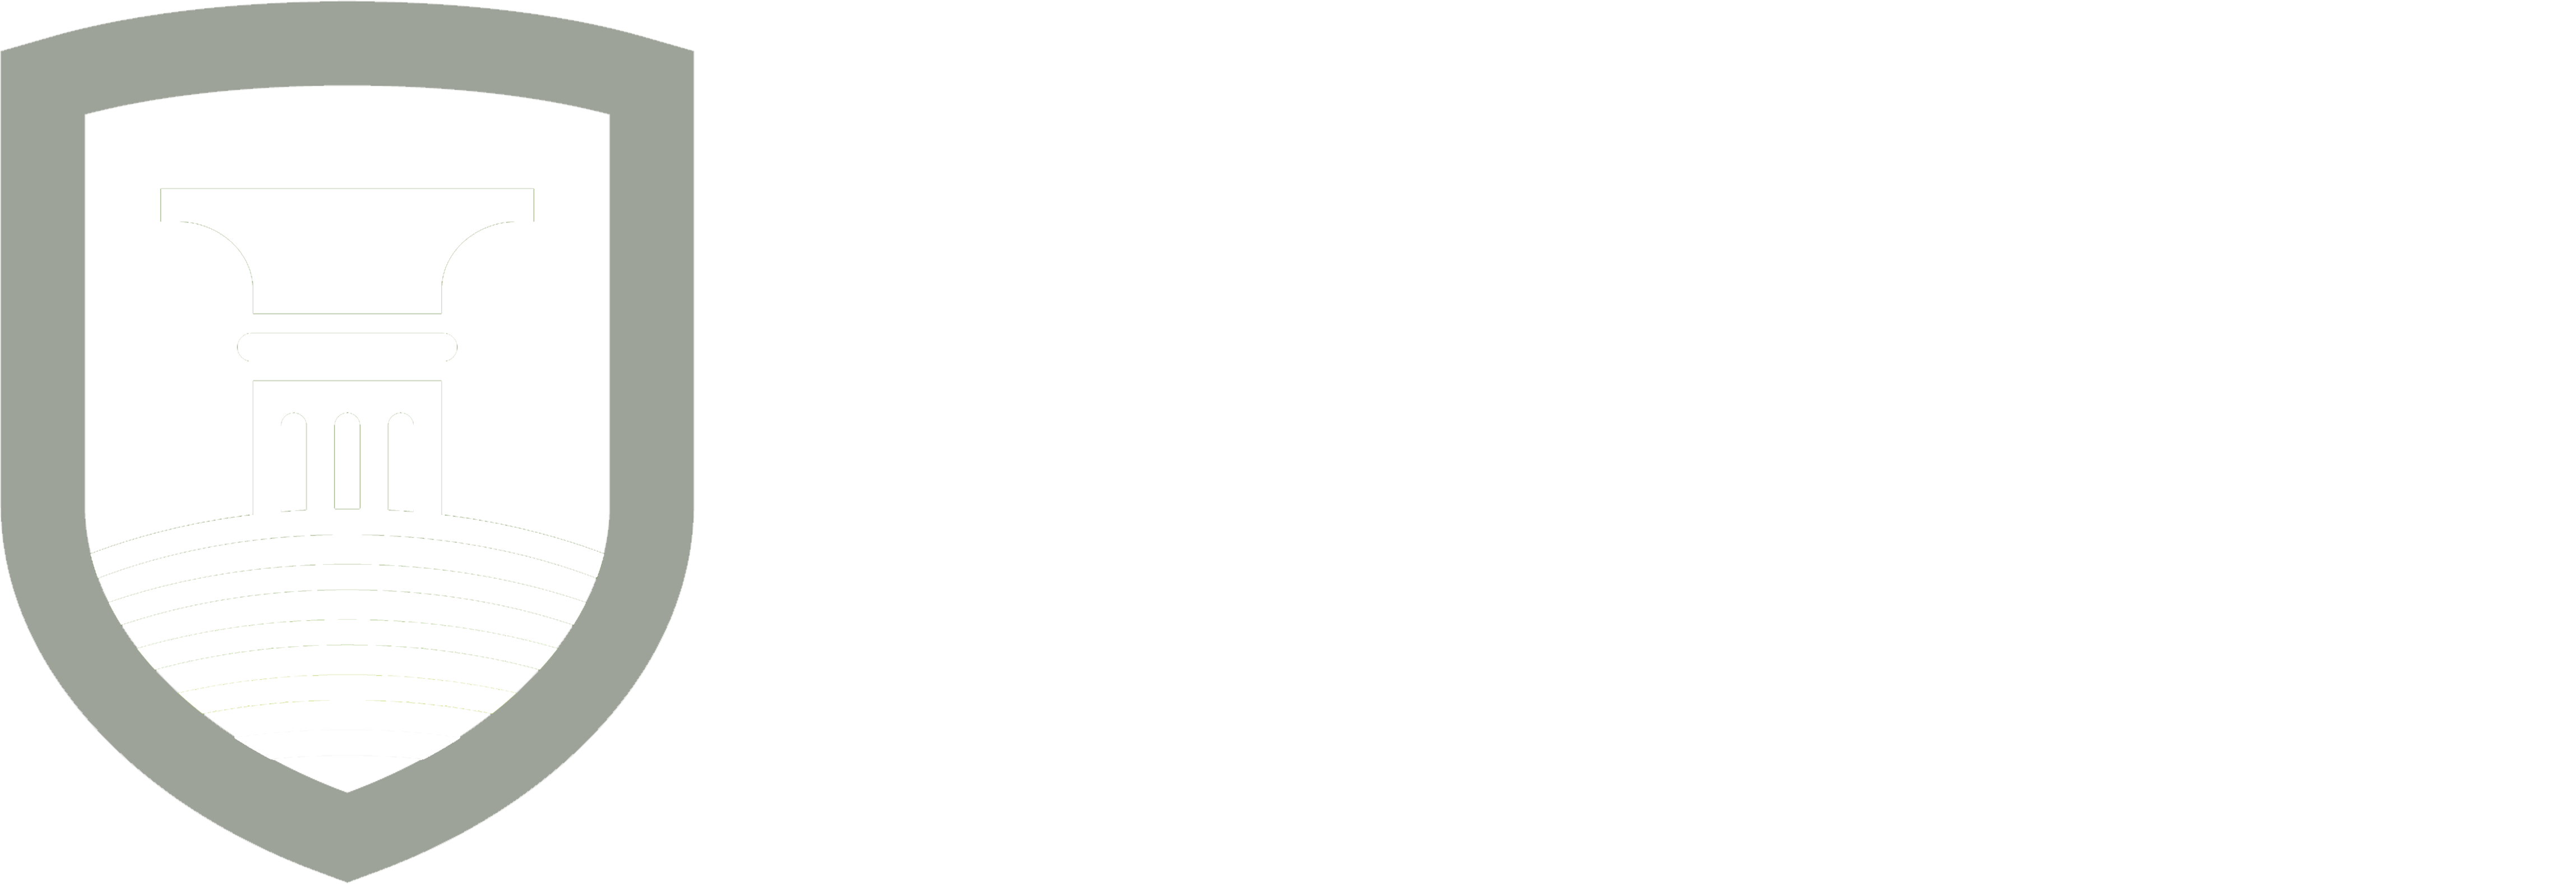 INTERNATIONAL BUSINESS COLLEGE